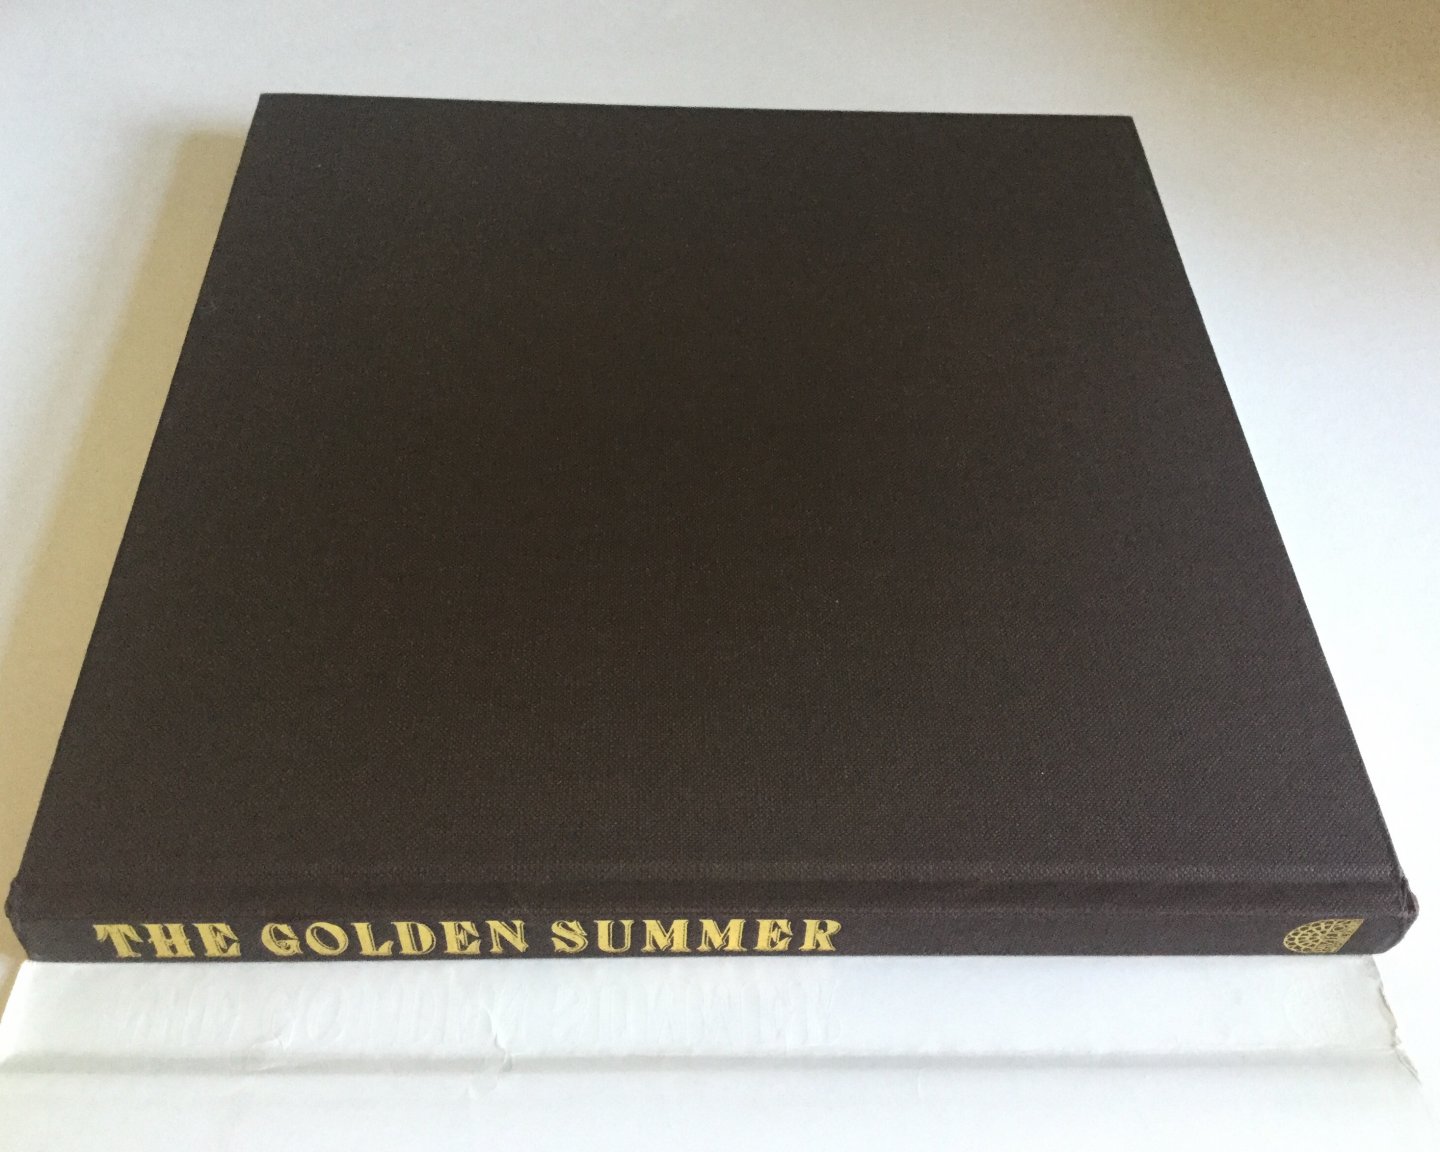 Buckland, Gail - Horace W. Nicholls - The Golden Summer - The Edwardian photographs of Horace W. Nicholls